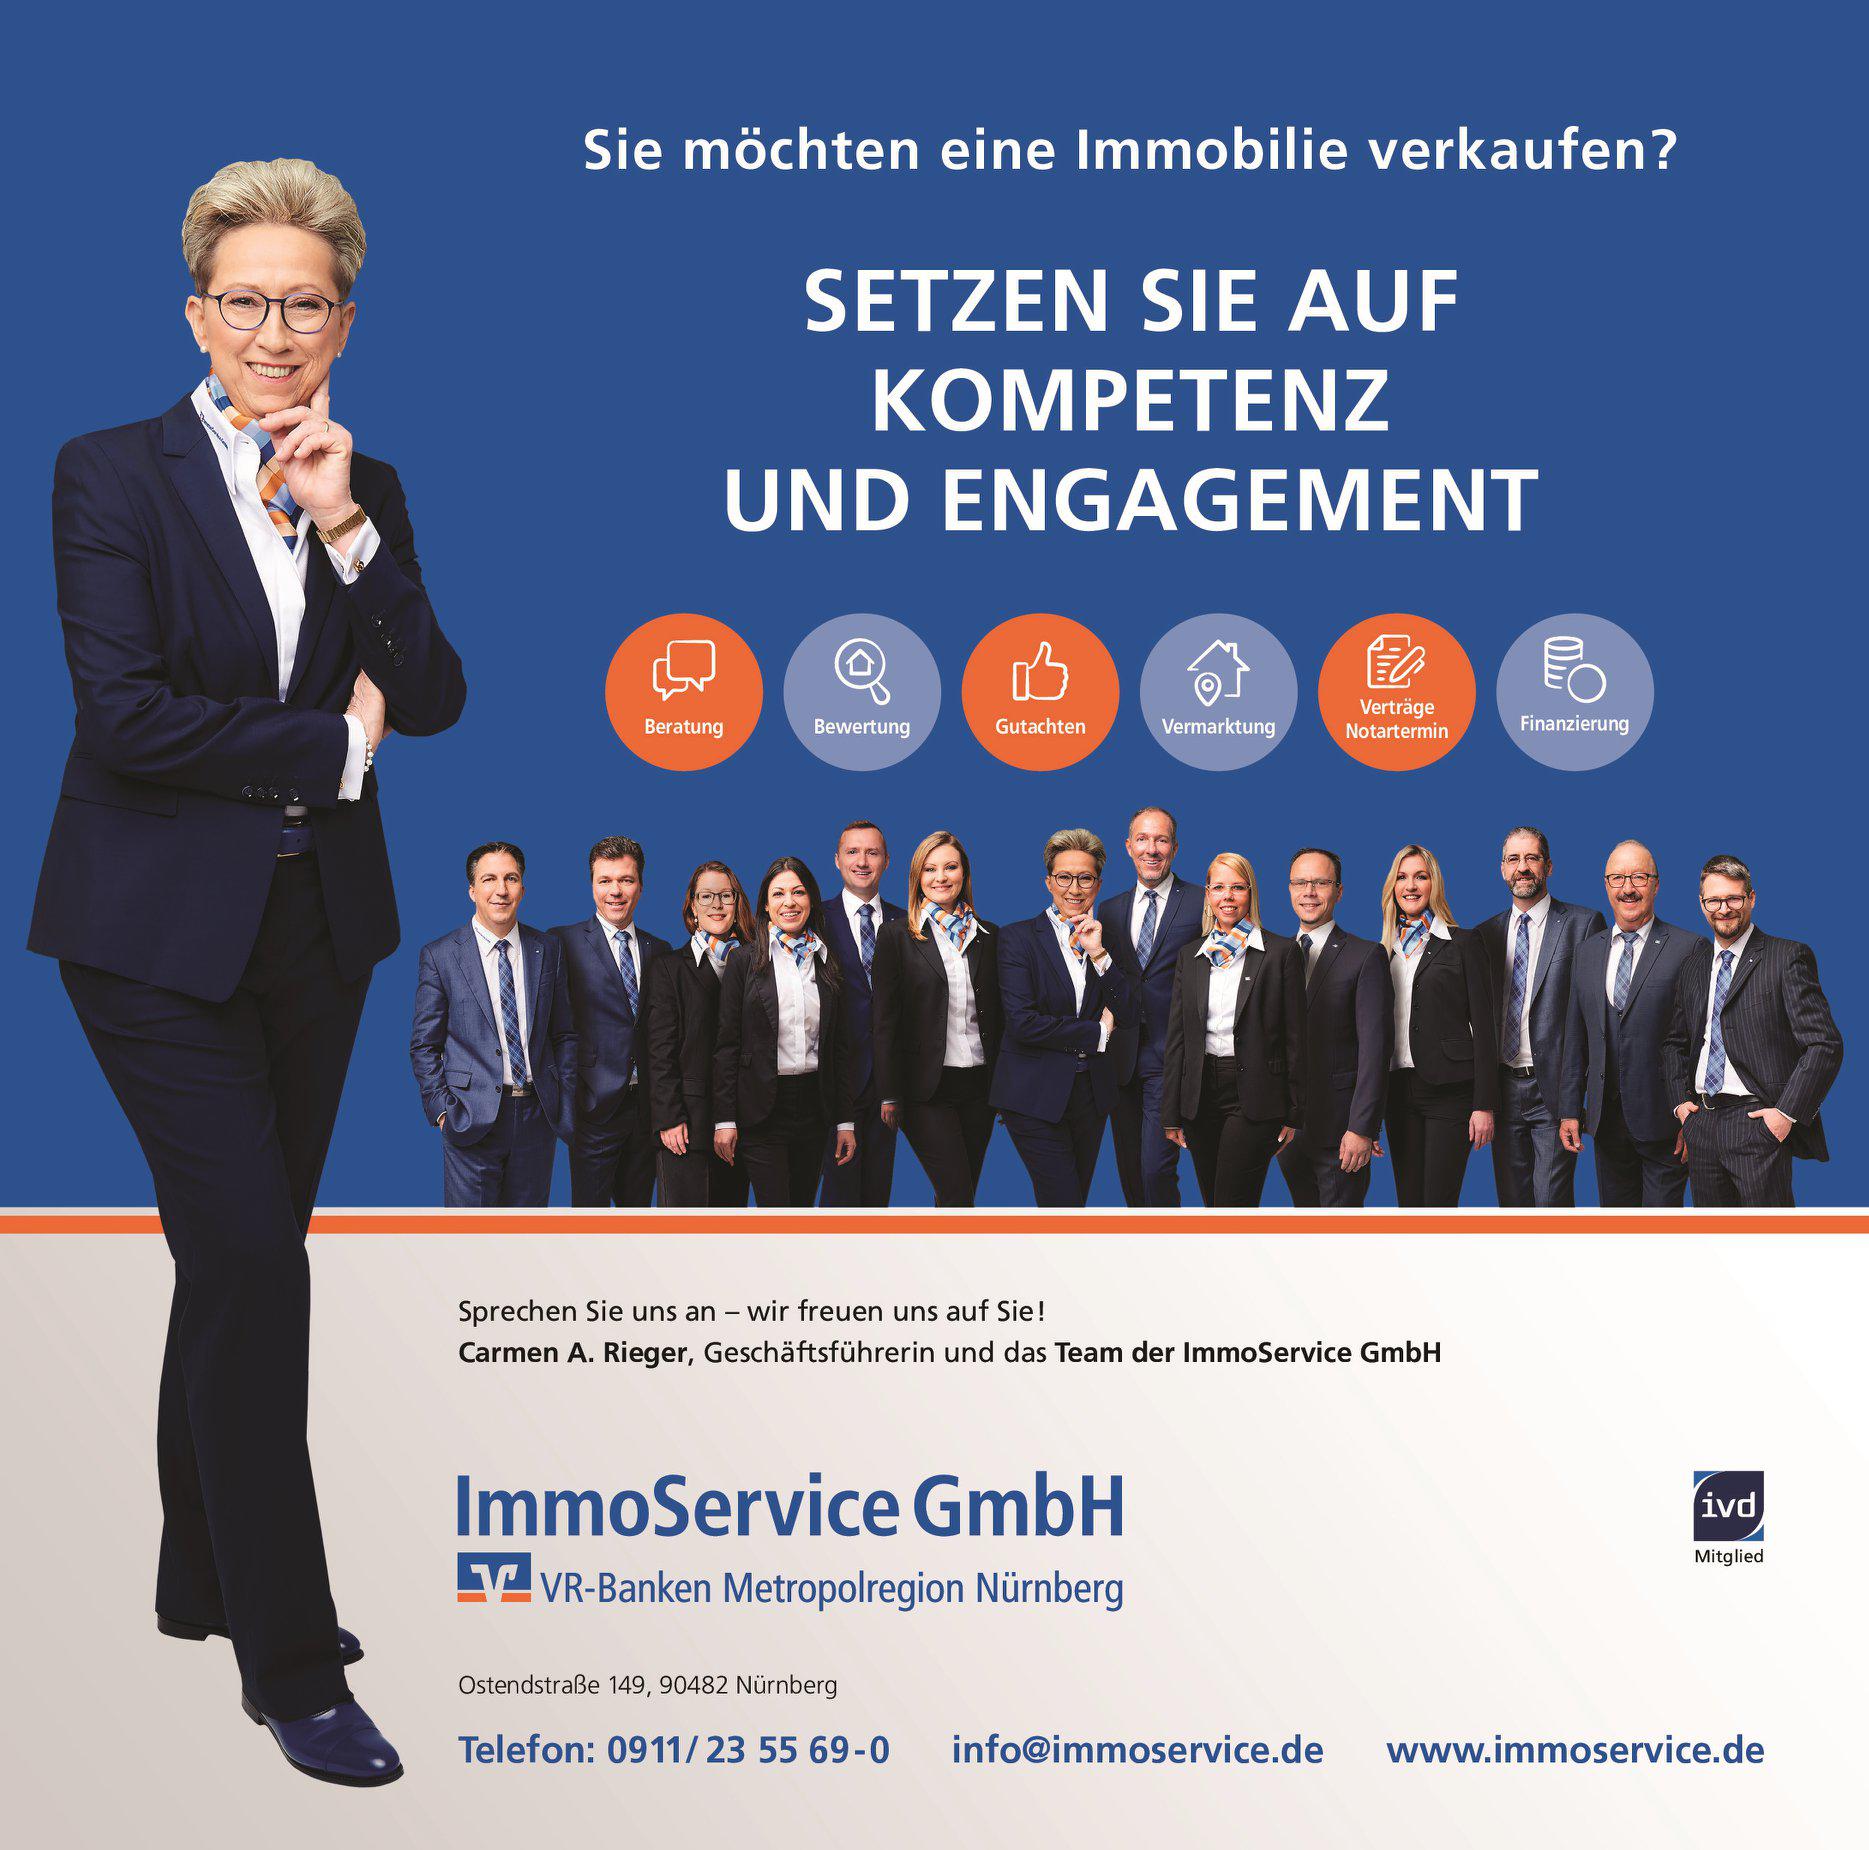 Immo Service GmbH VR-Banken Metropolregion Nbg., Ostendstraße 149 in Nürnberg